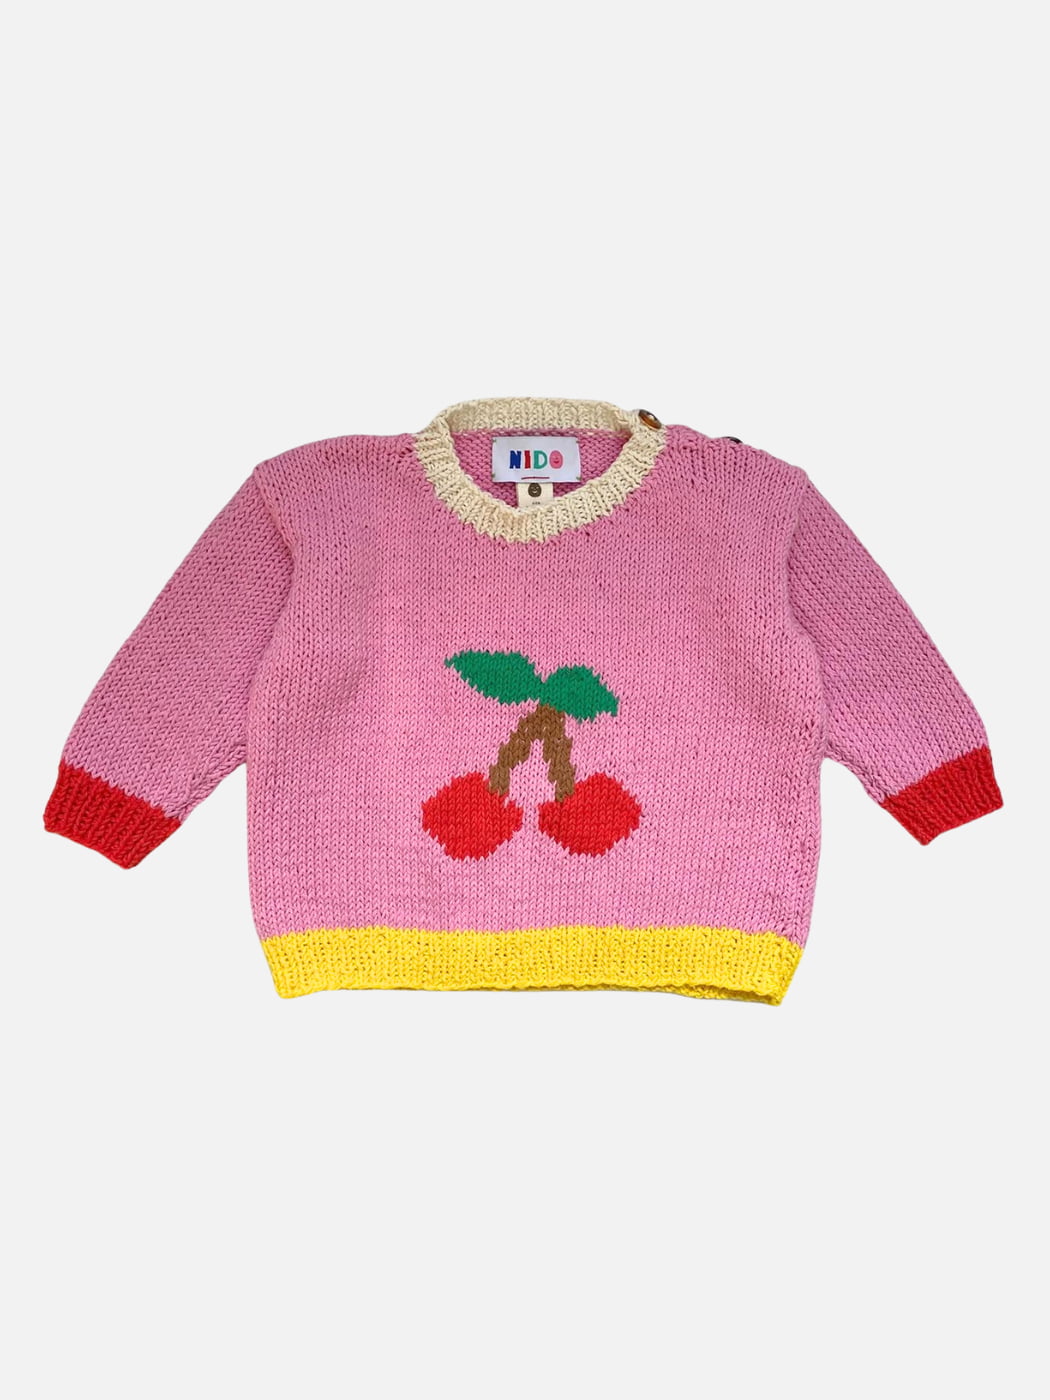 Cherry Sweater Preorder